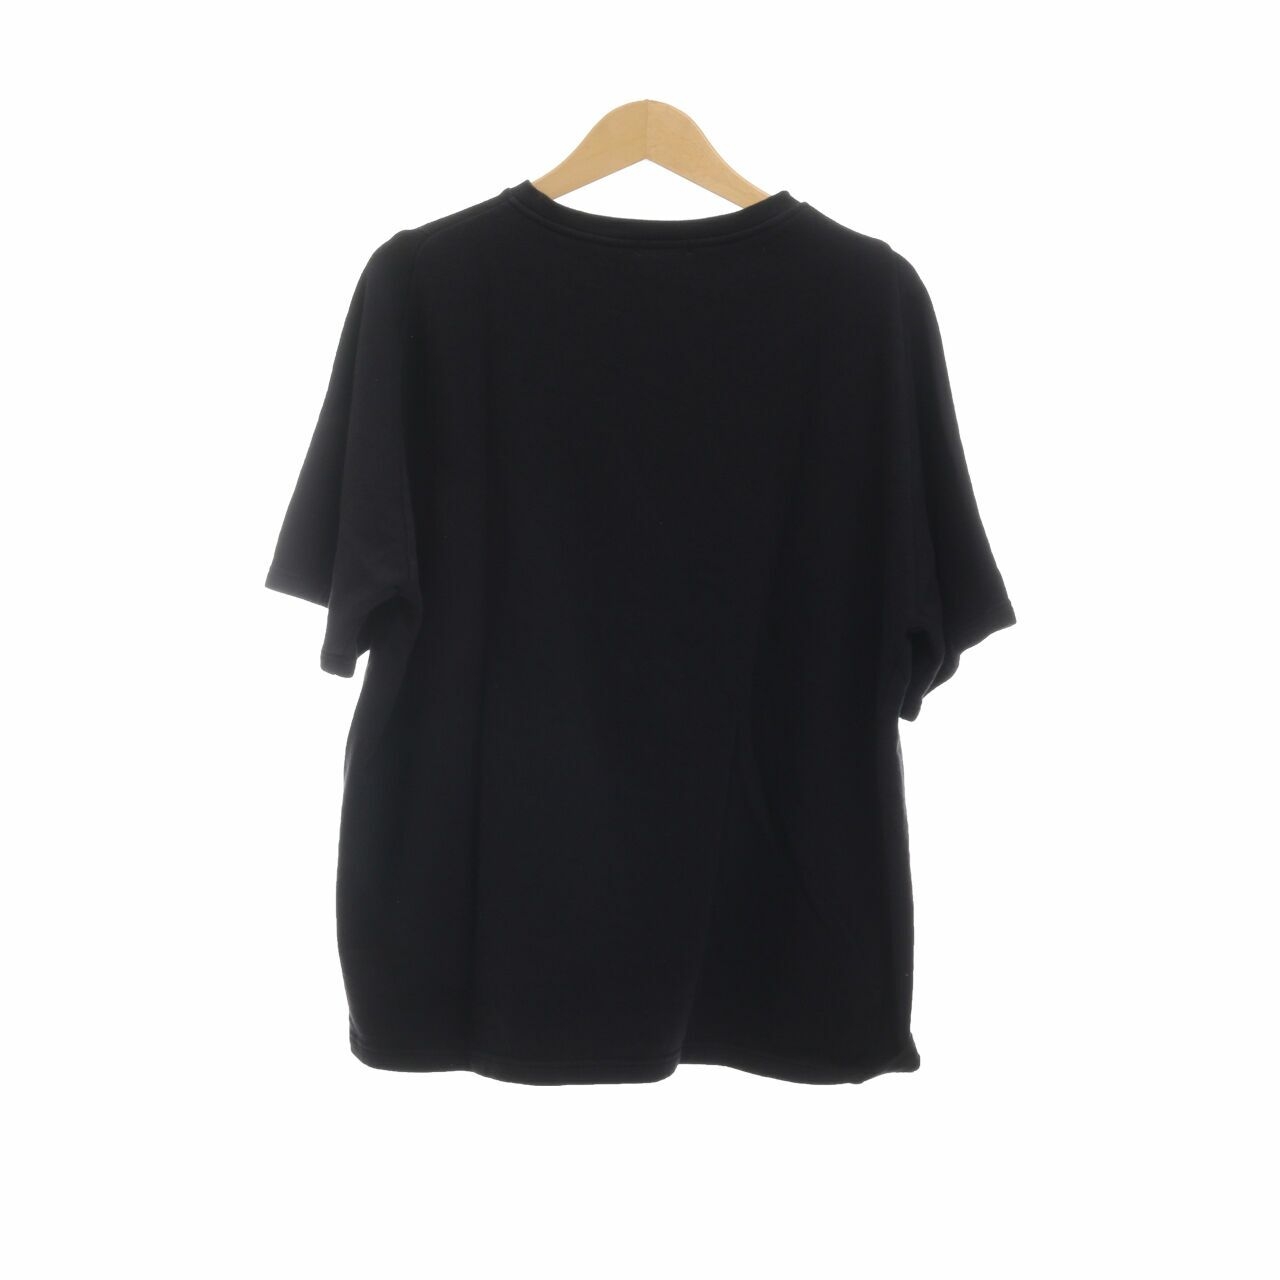 Hattaco Black T-Shirt